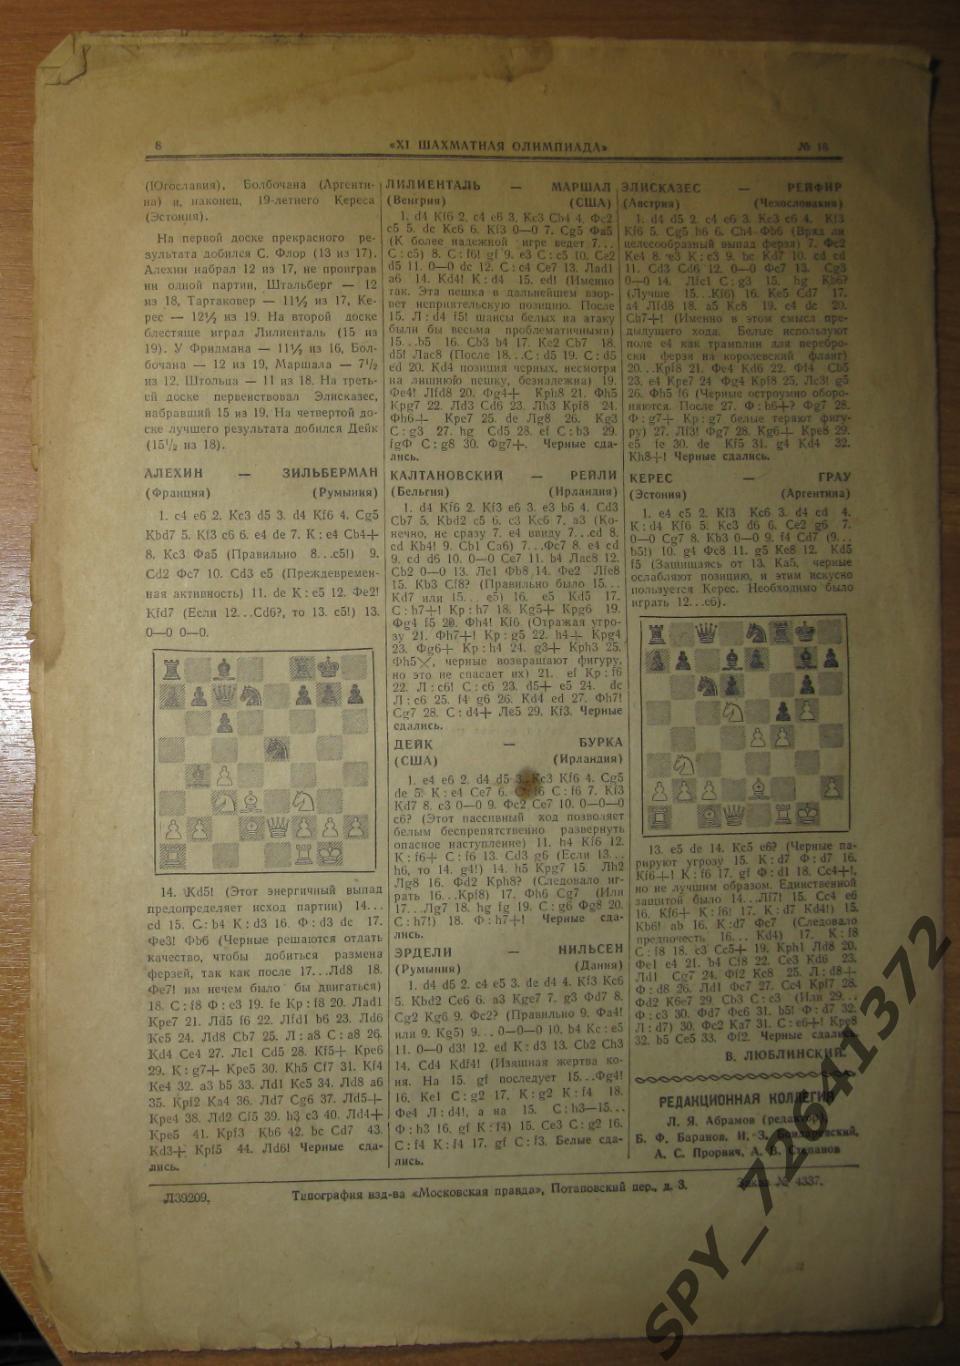 Бюллетень комитета по физкультуре и спорту 21 шахматная олимпиада.1954 г. N16 4